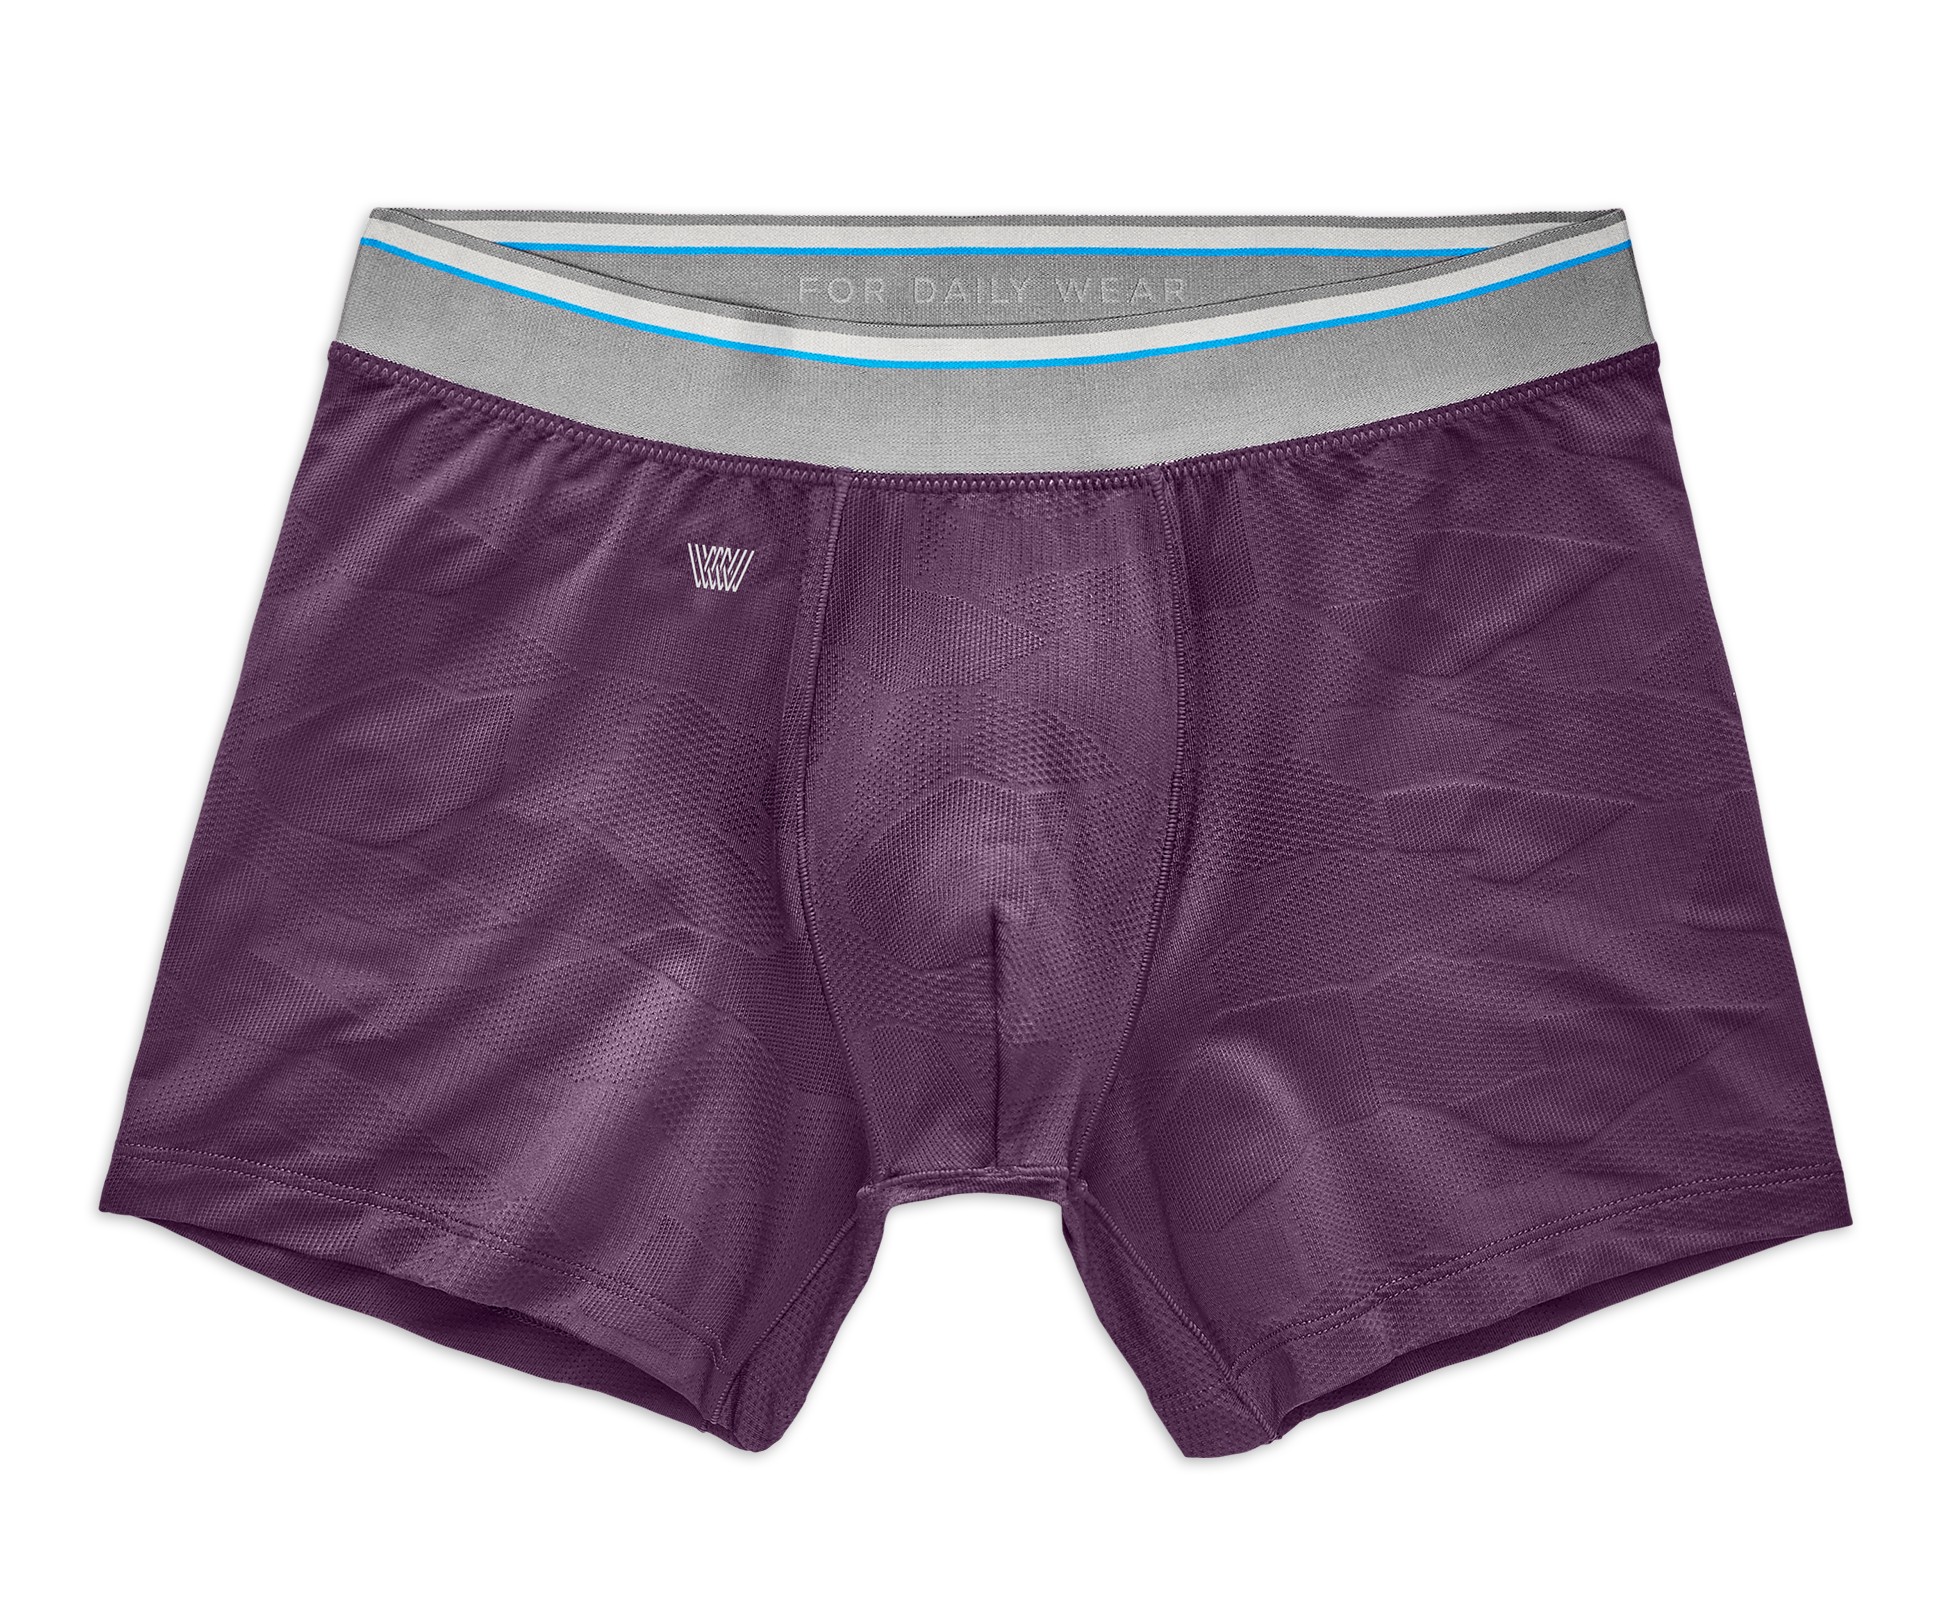 Patterned Poplin Boxer Shorts 3-Pack for Men -- 3.75-inch inseam